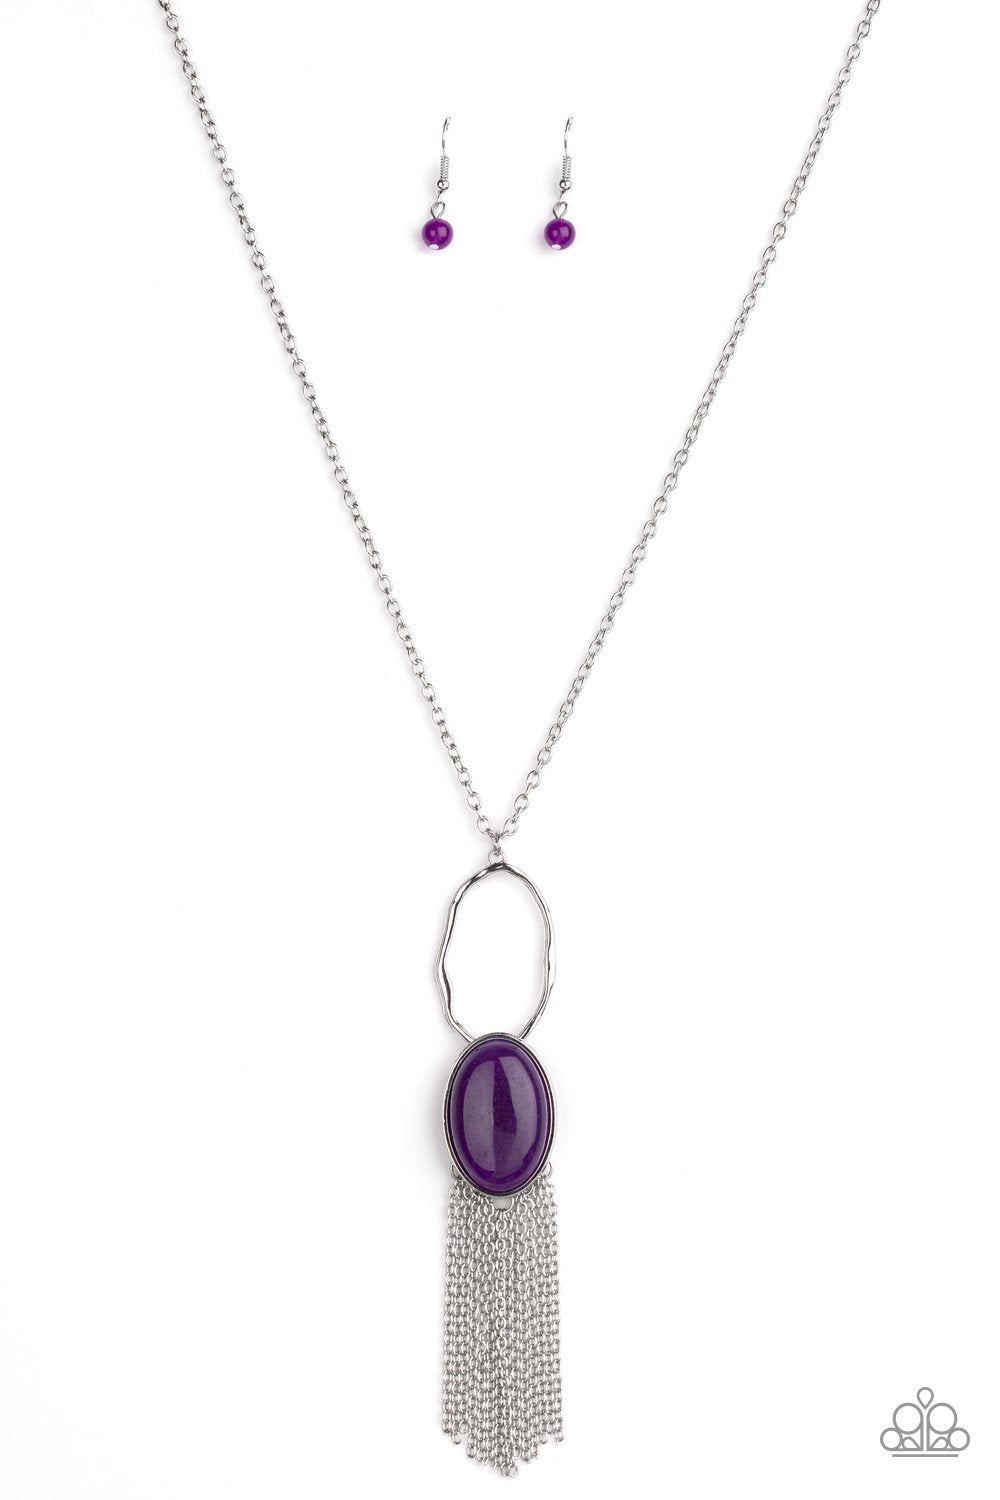 Dewy Desert Purple Stone Necklace - Paparazzi Accessories- lightbox - CarasShop.com - $5 Jewelry by Cara Jewels